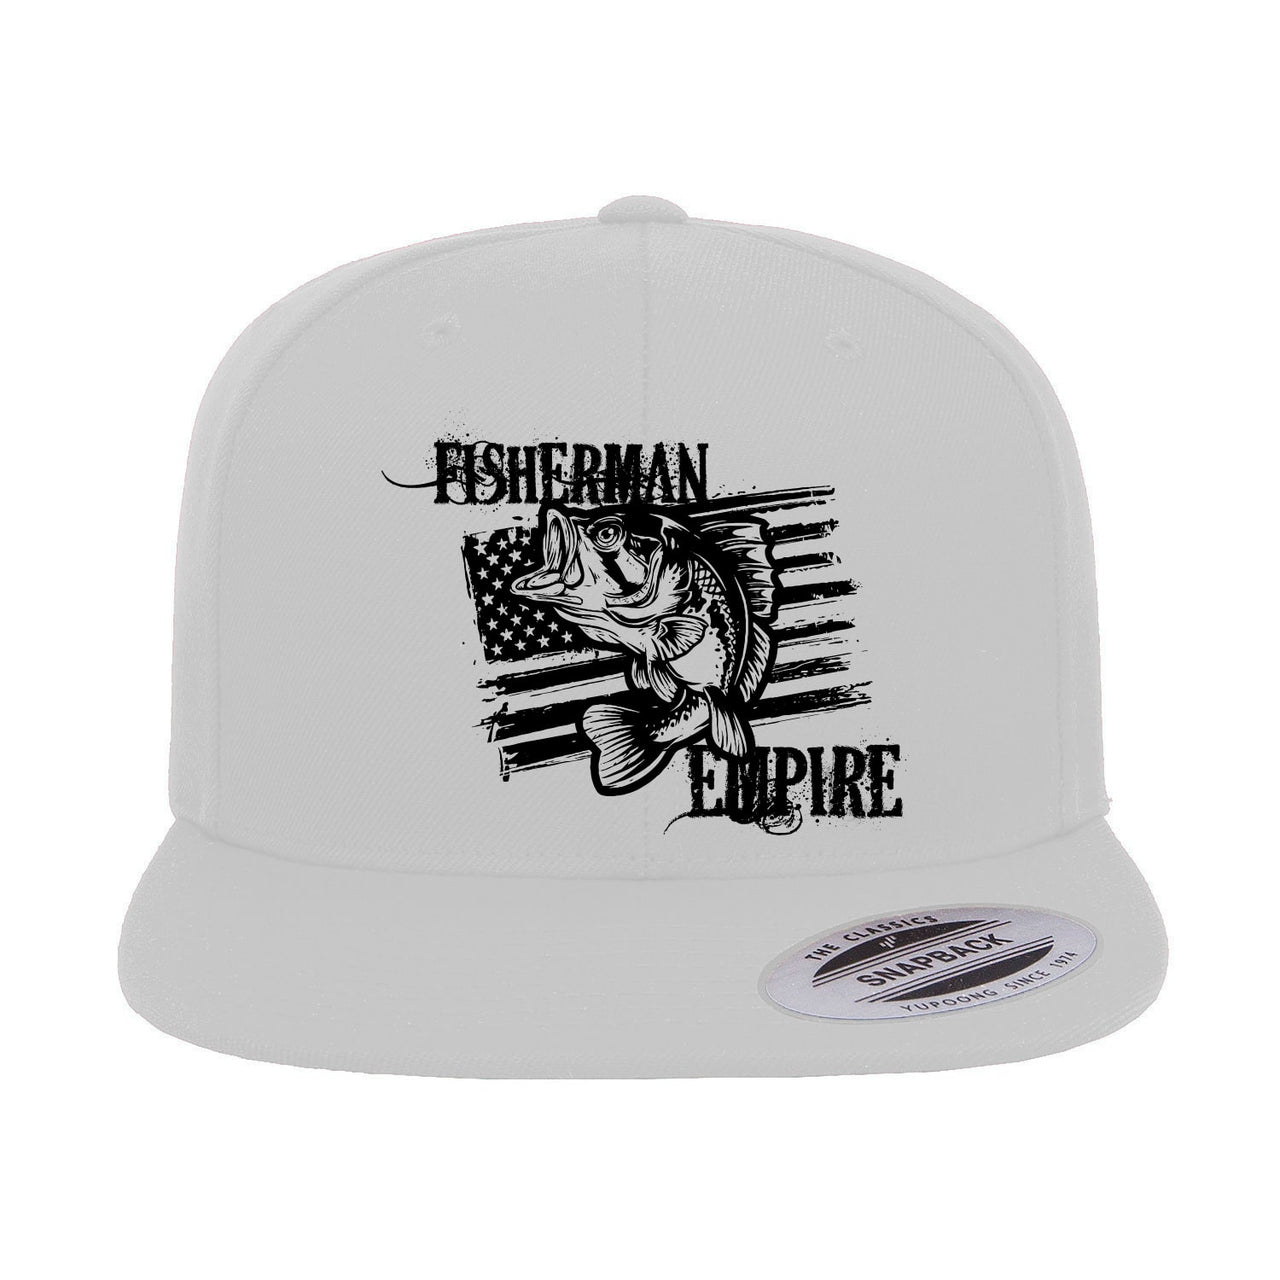 Fisherman Empire Embroidered Flat Bill Cap